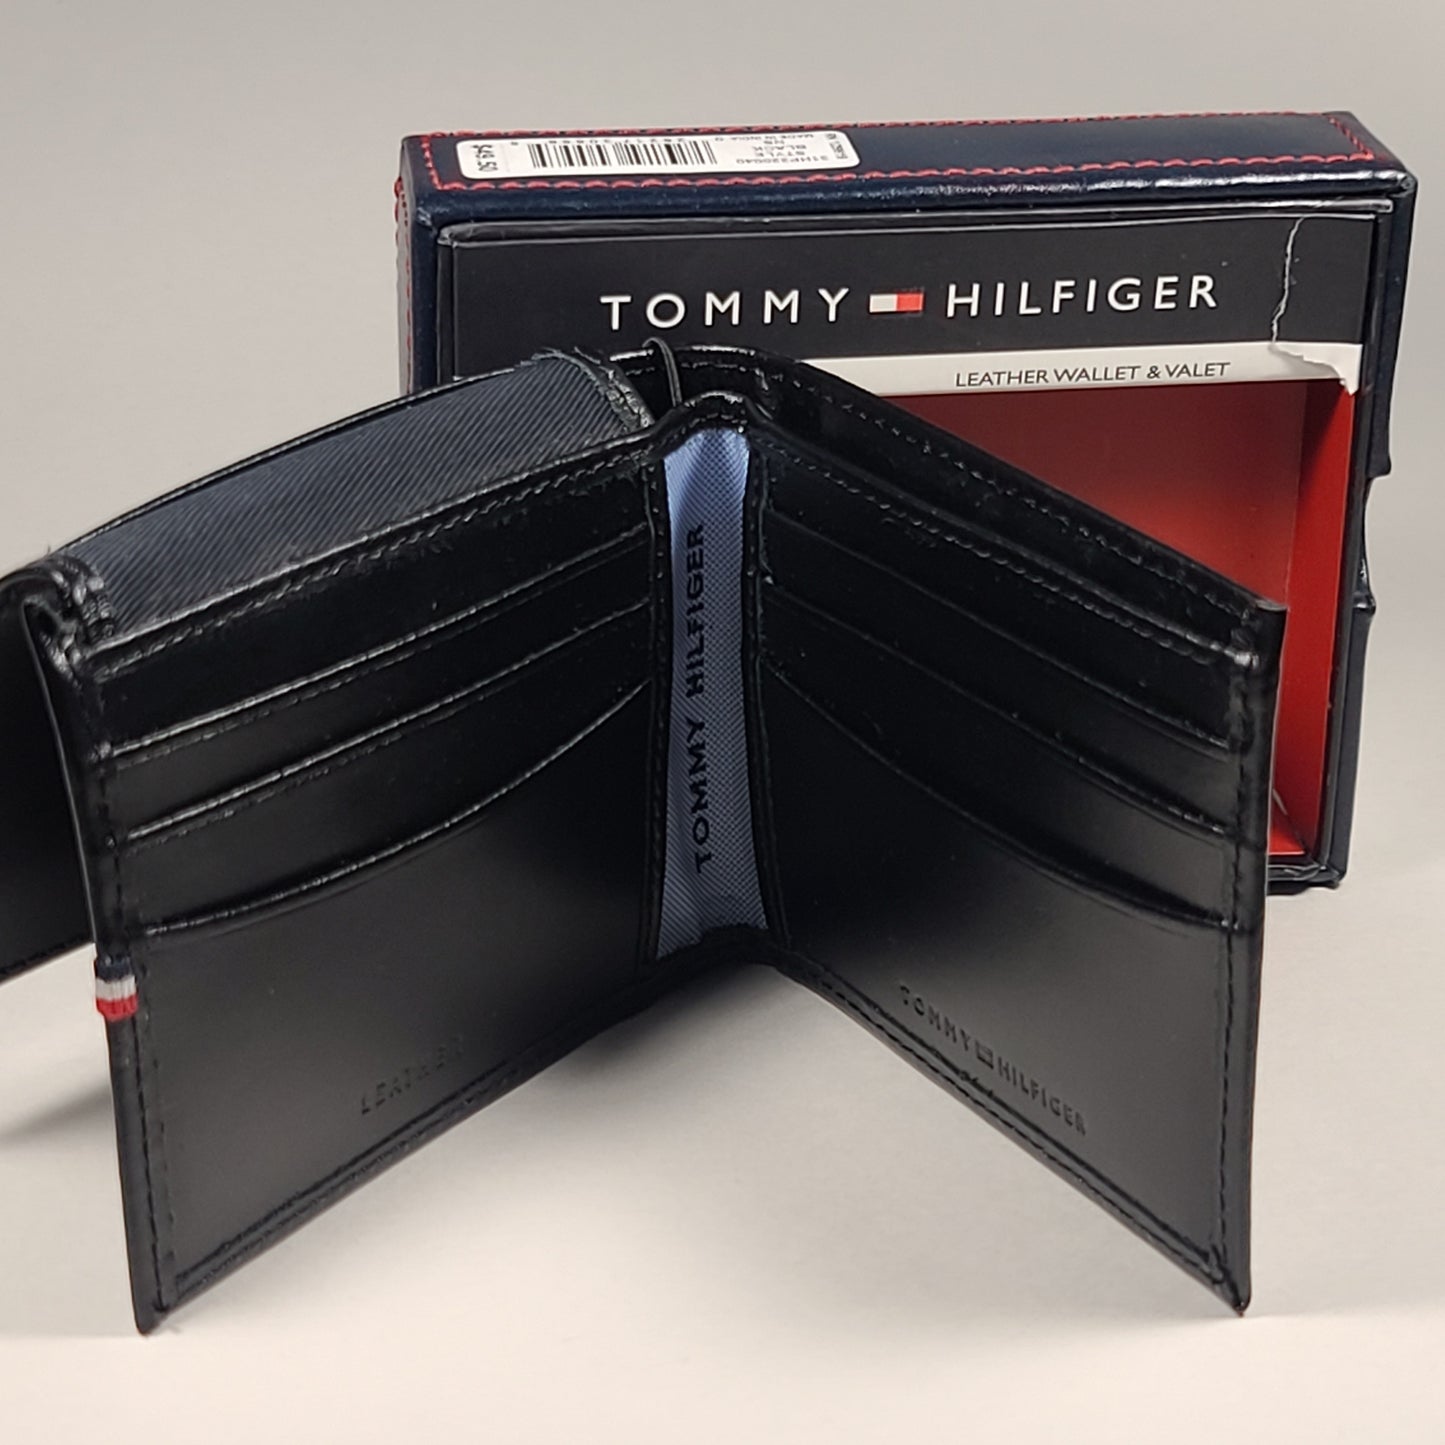 Tommy Hilfiger Men’s Bifold Black Leather RFID Wallet & Valet Passcase 31HP220040 - Wallets